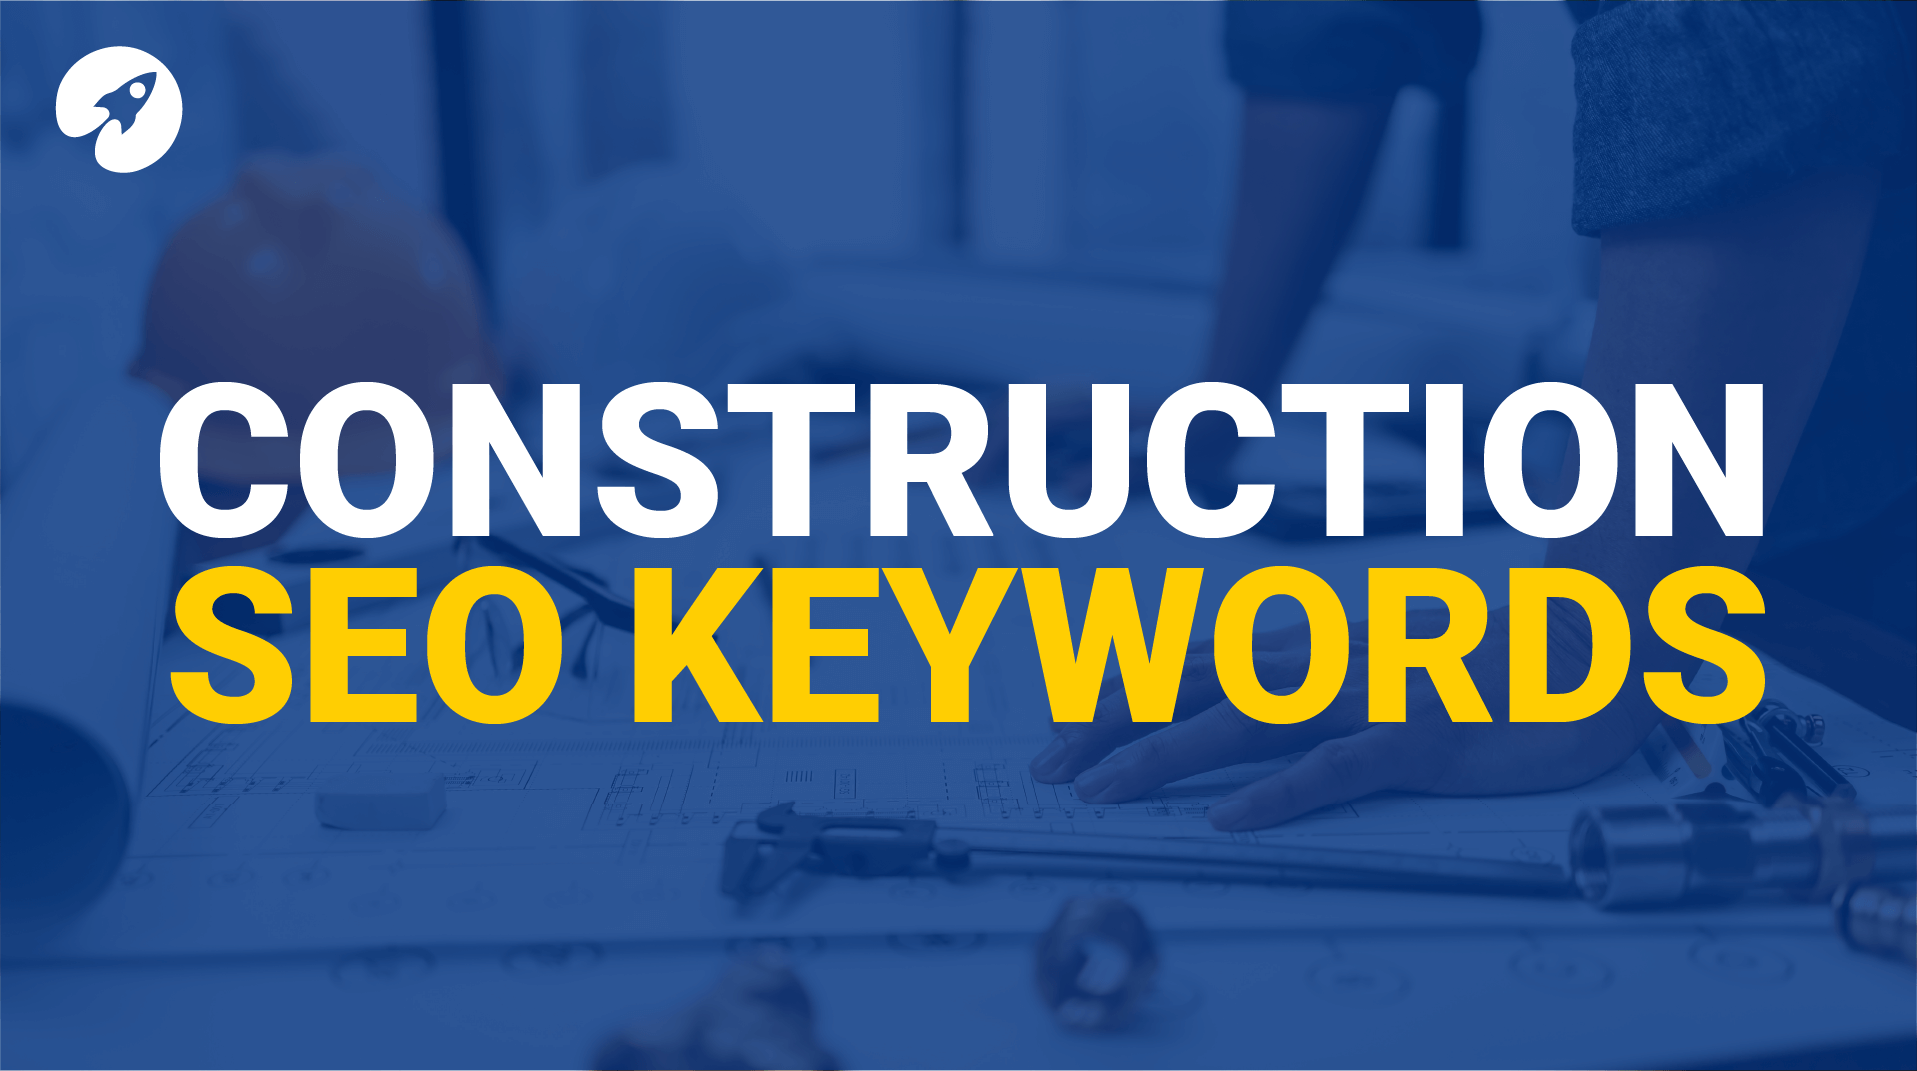 Construction SEO keywords